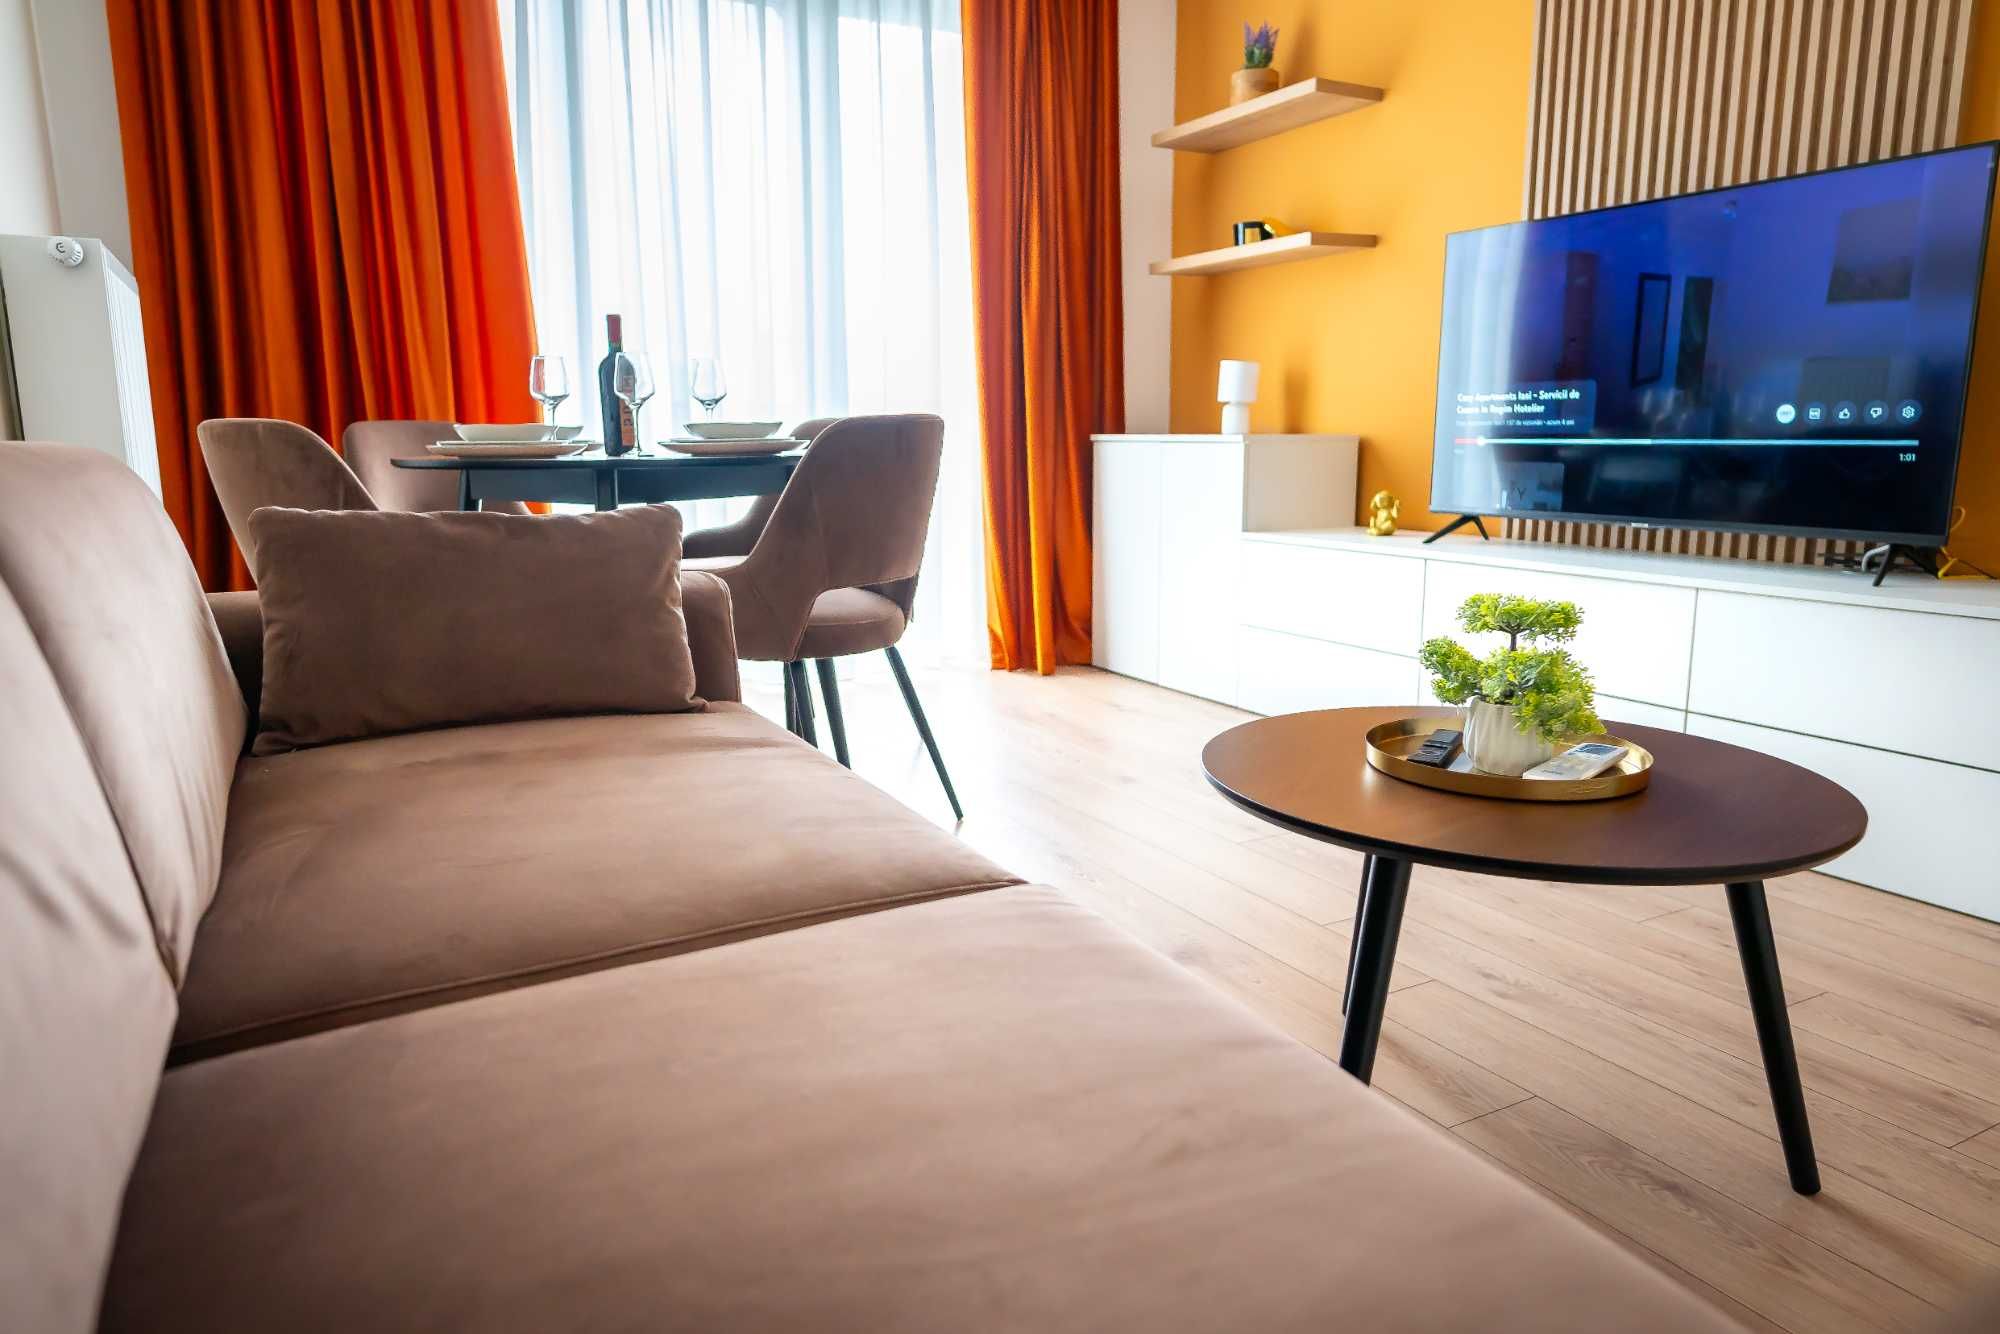 Apartamente Regim Hotelier - Business / Delegatii / Vouchere Vacanta